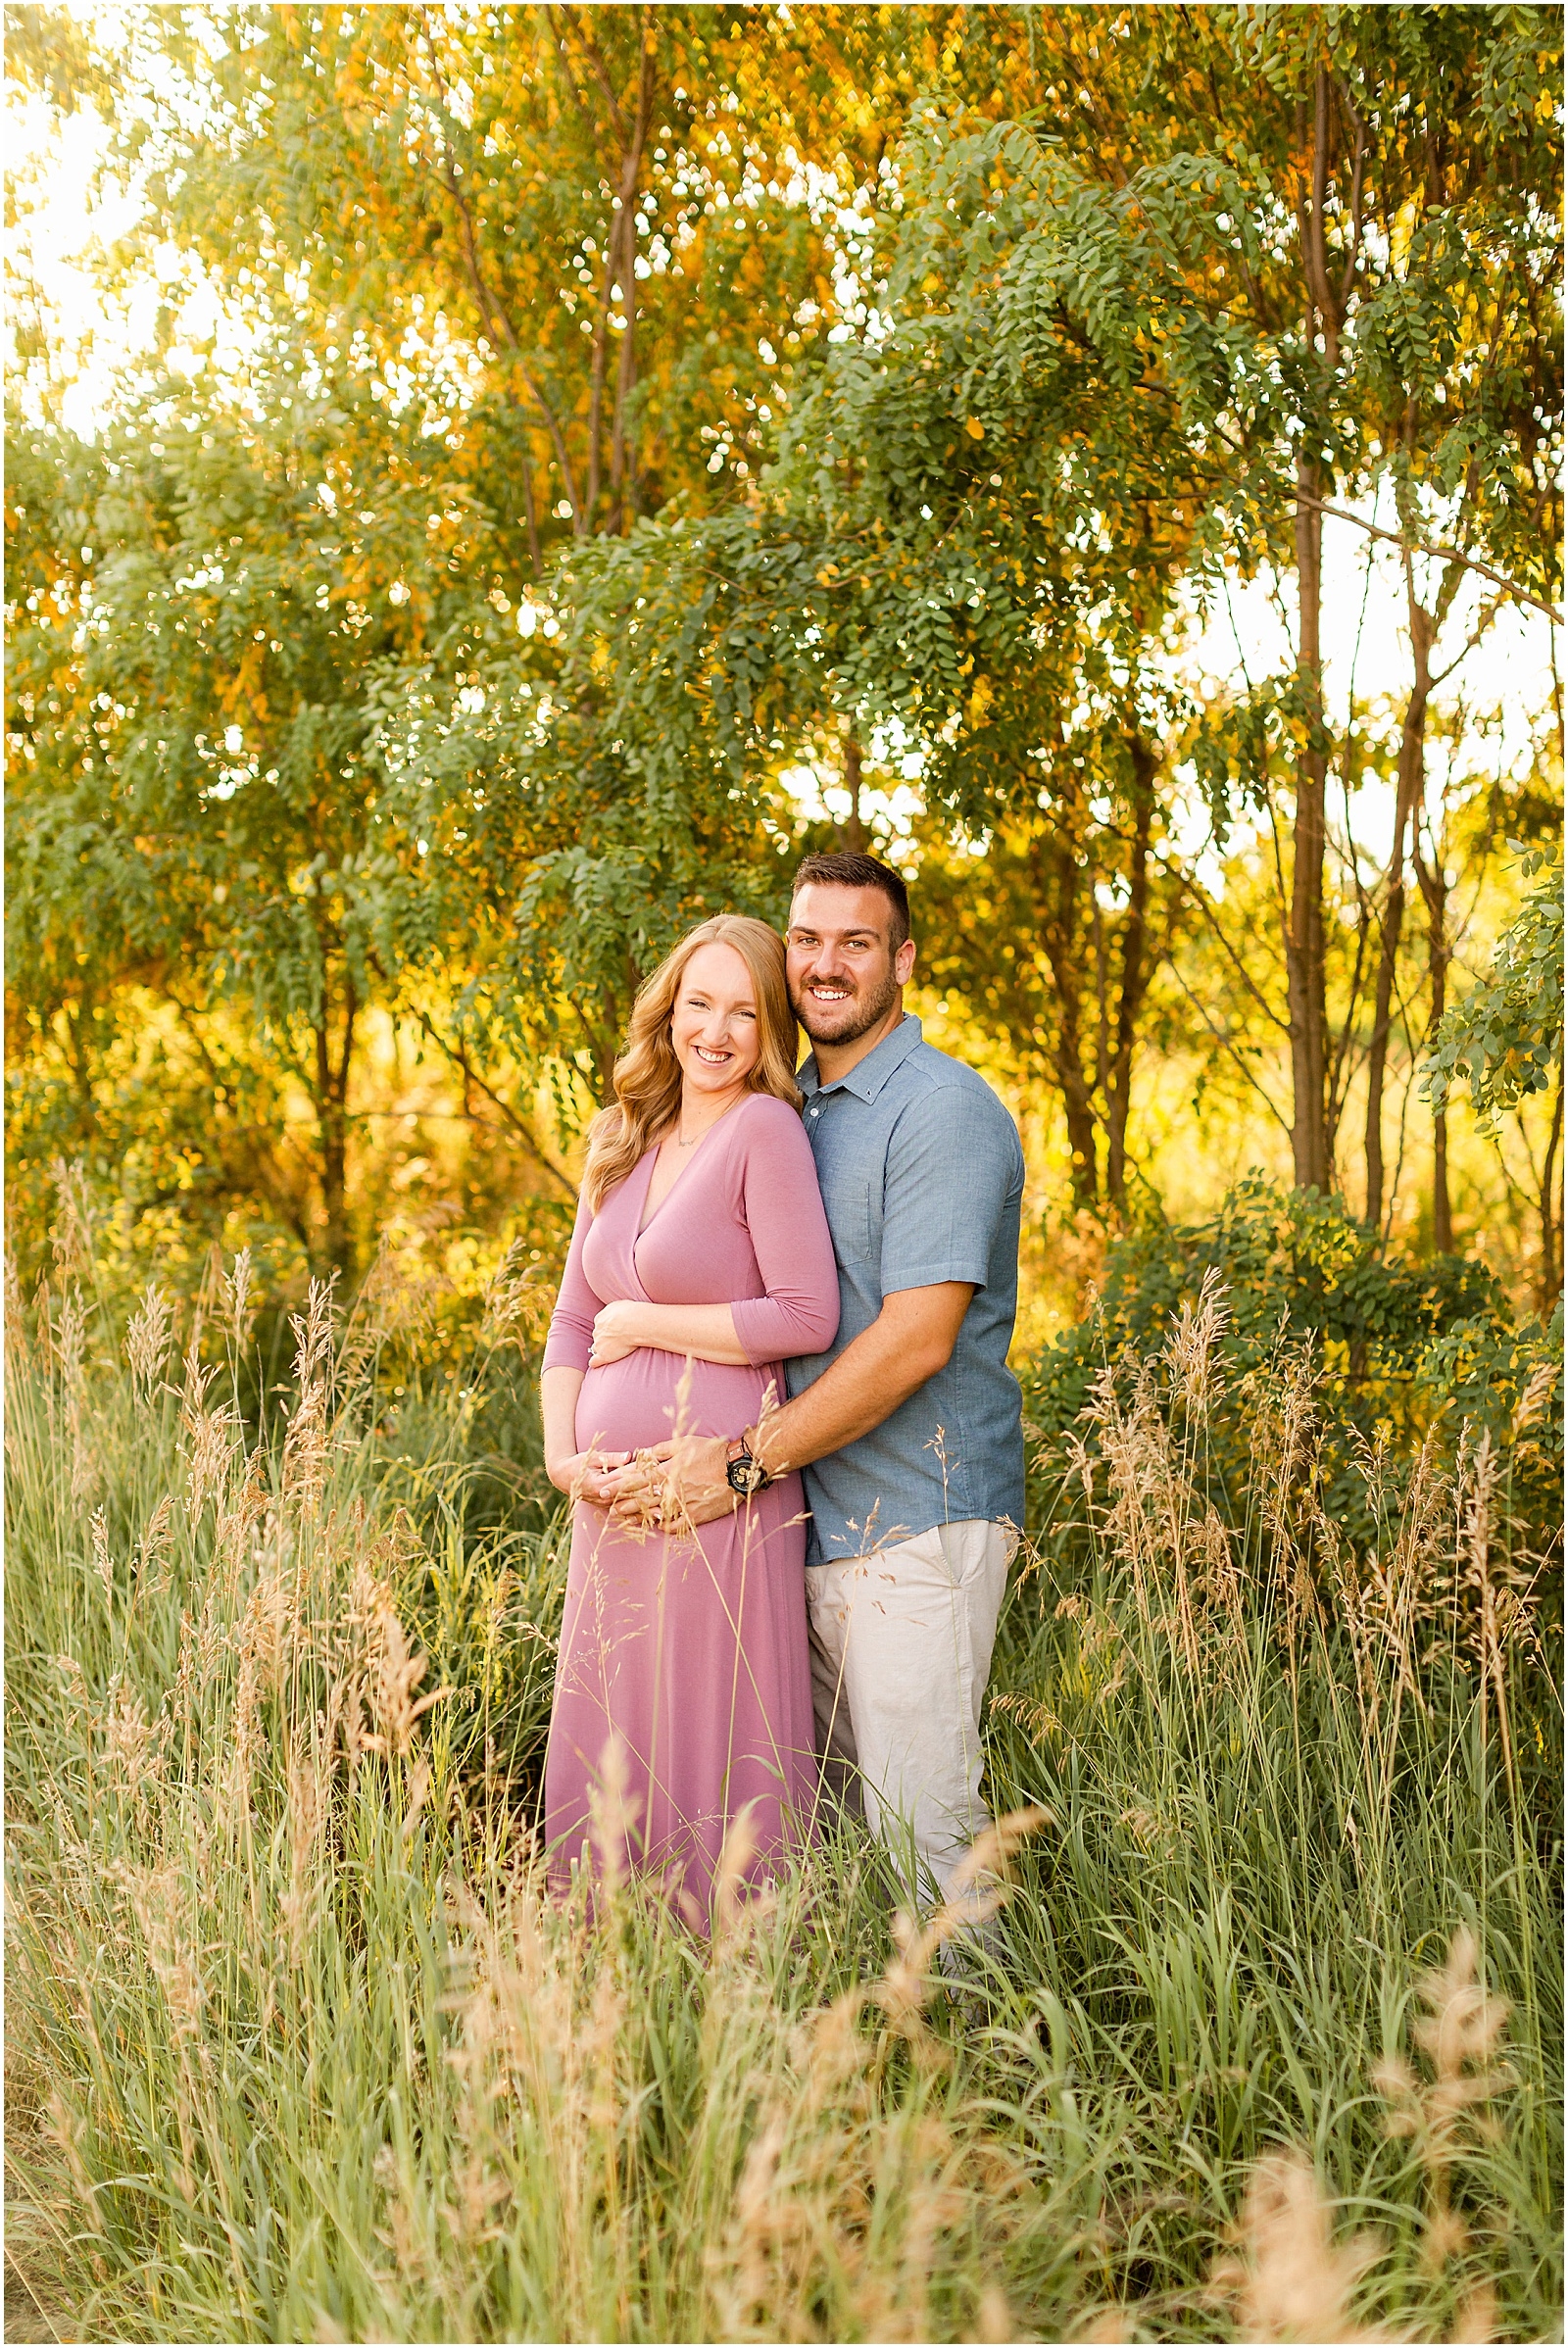 Ellen and Jake | Maternity Session Bret and Brandie | Evansville Photographers | @bretandbrandie-0010.jpg